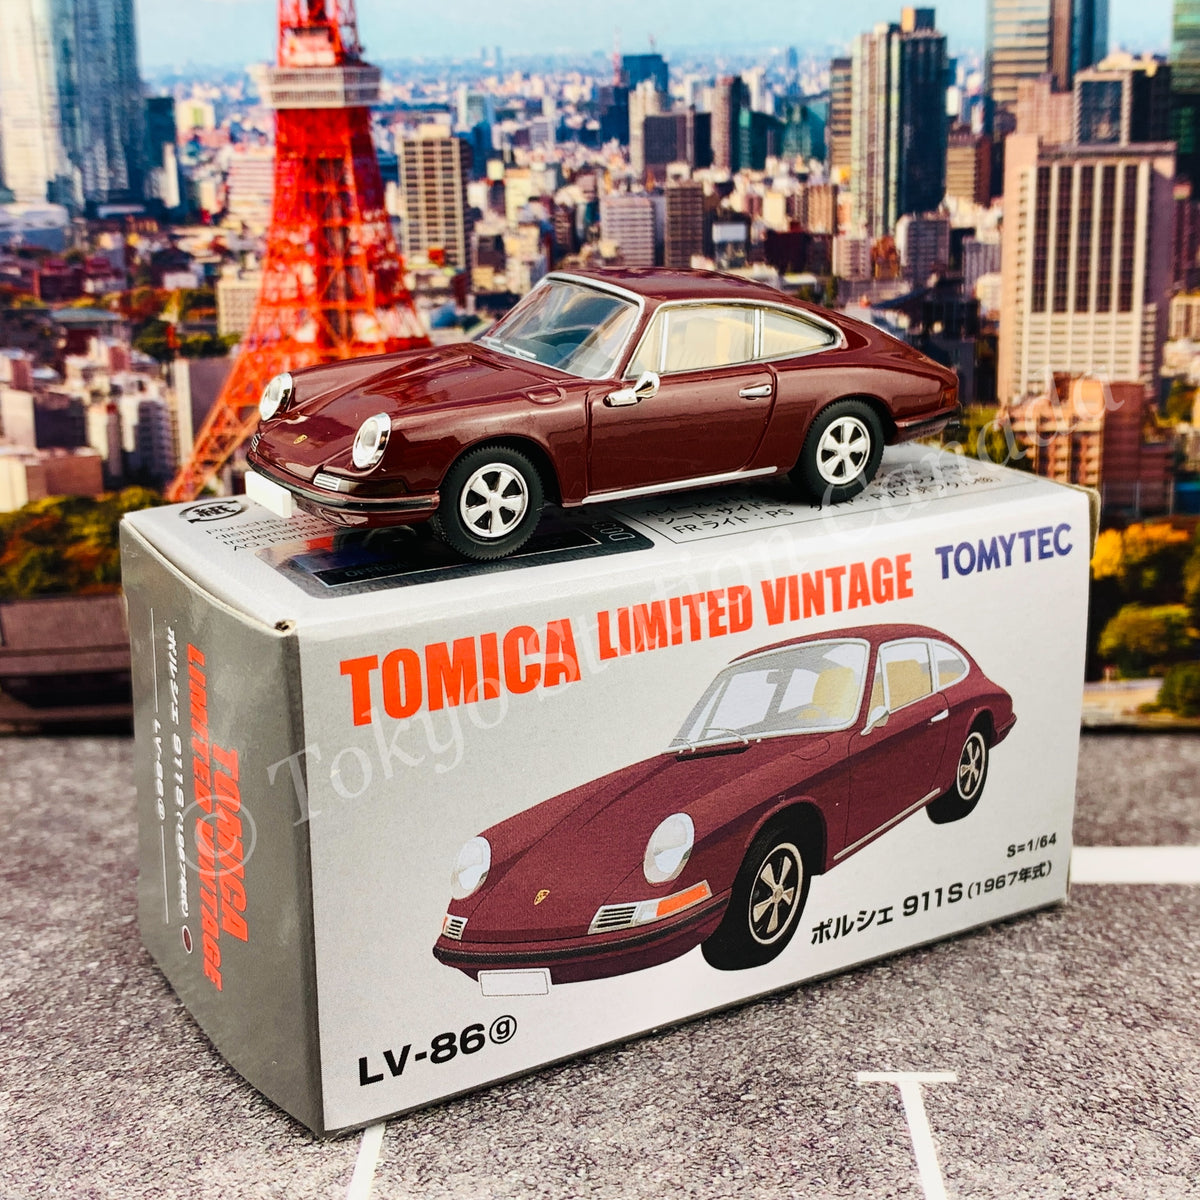 Tomica Limited Vintage 1//64 LV-86g Porsche 911S Maroon 312536